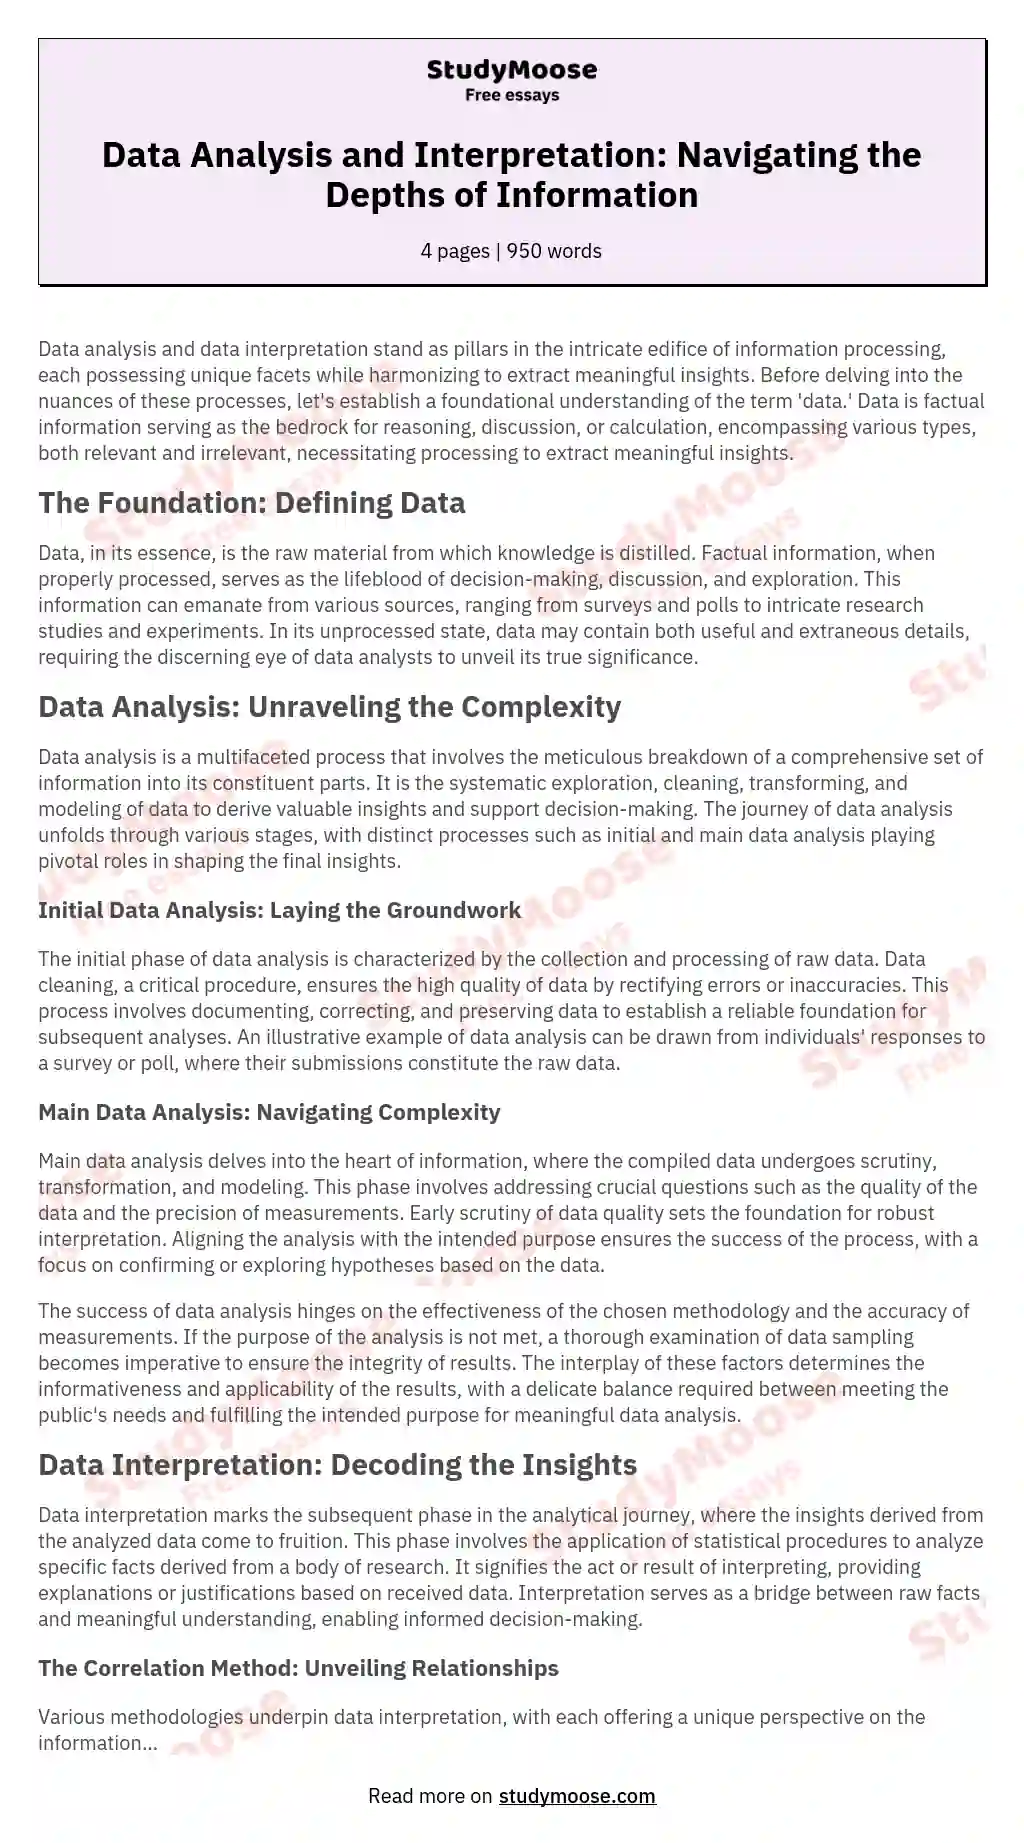 Data Analysis and Interpretation: Navigating the Depths of Information essay